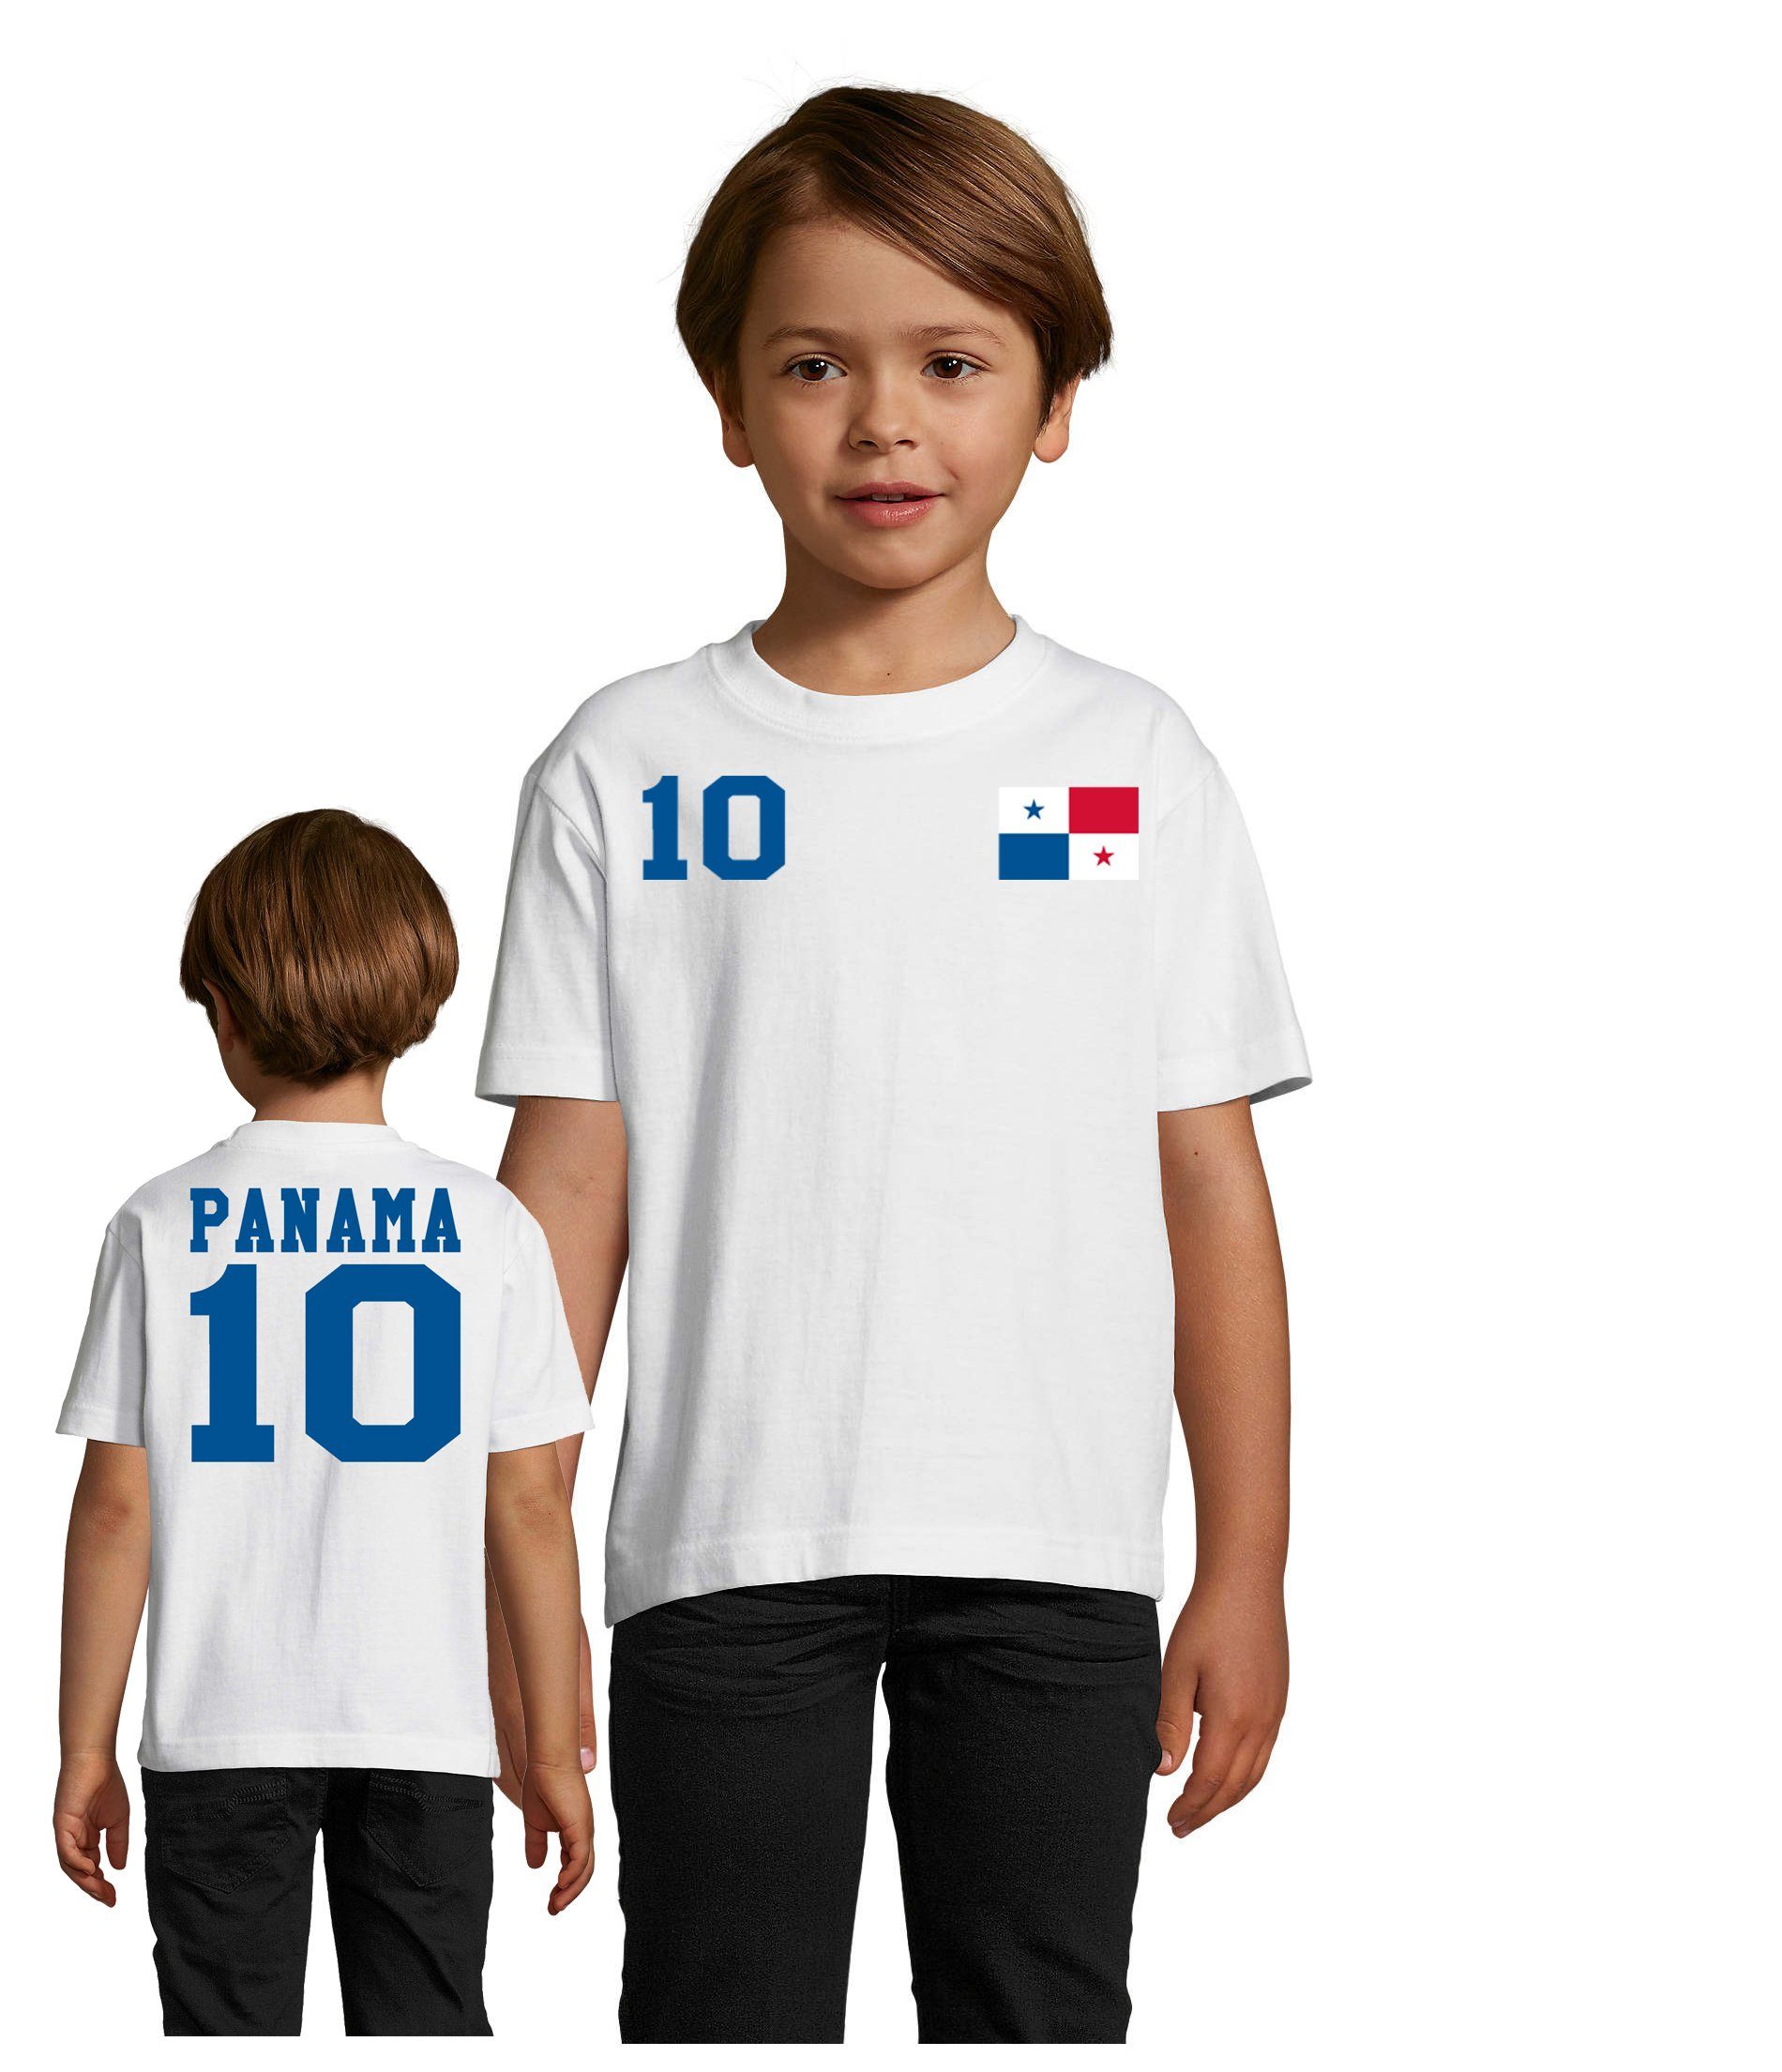 Blondie & Brownie T-Shirt Kinder Panama Fun Fan Sport Trikot Fußball Meister WM Copa America